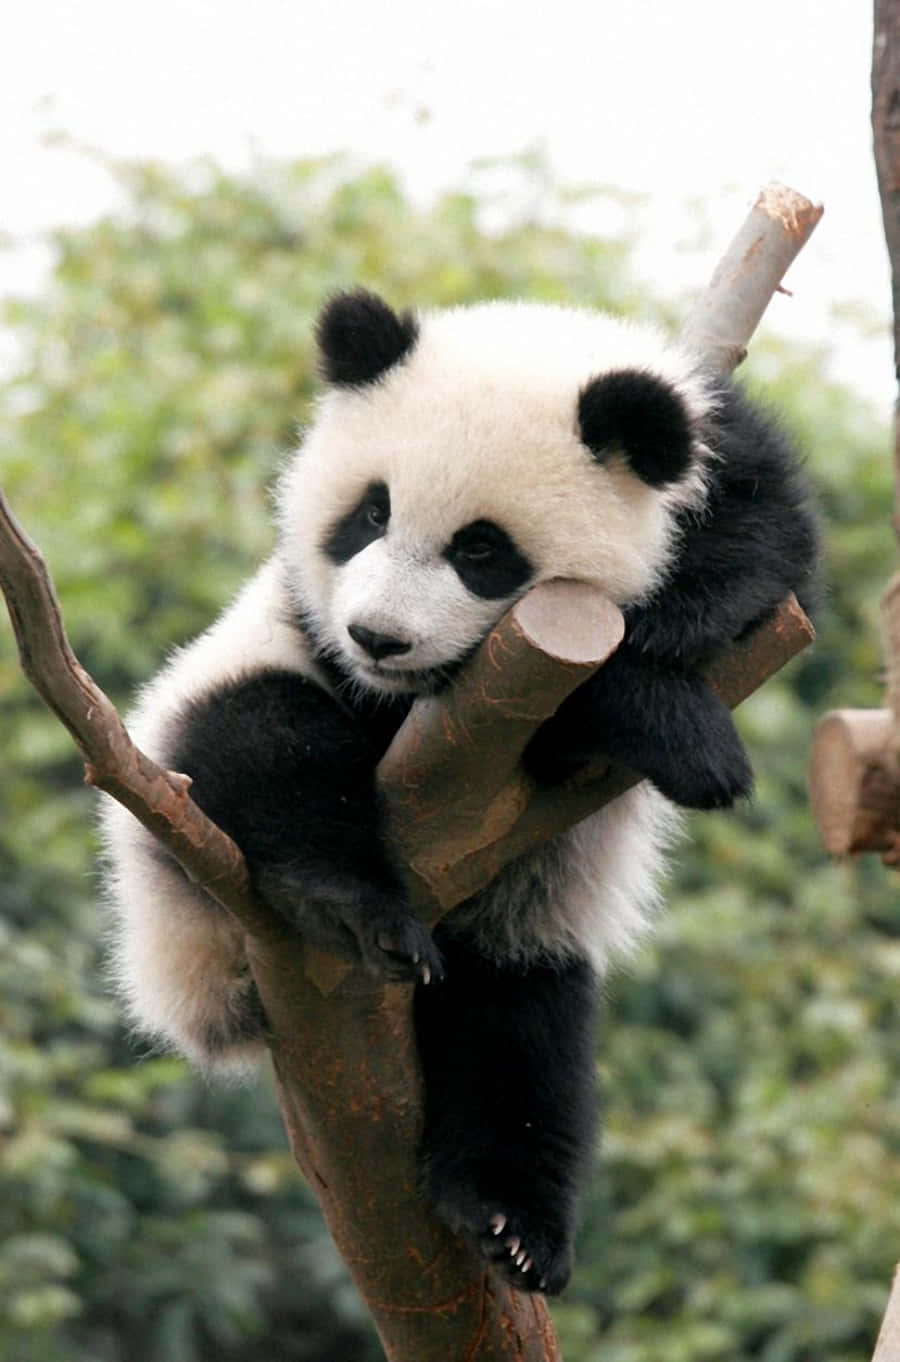 "What's more adorable than a cute panda?"